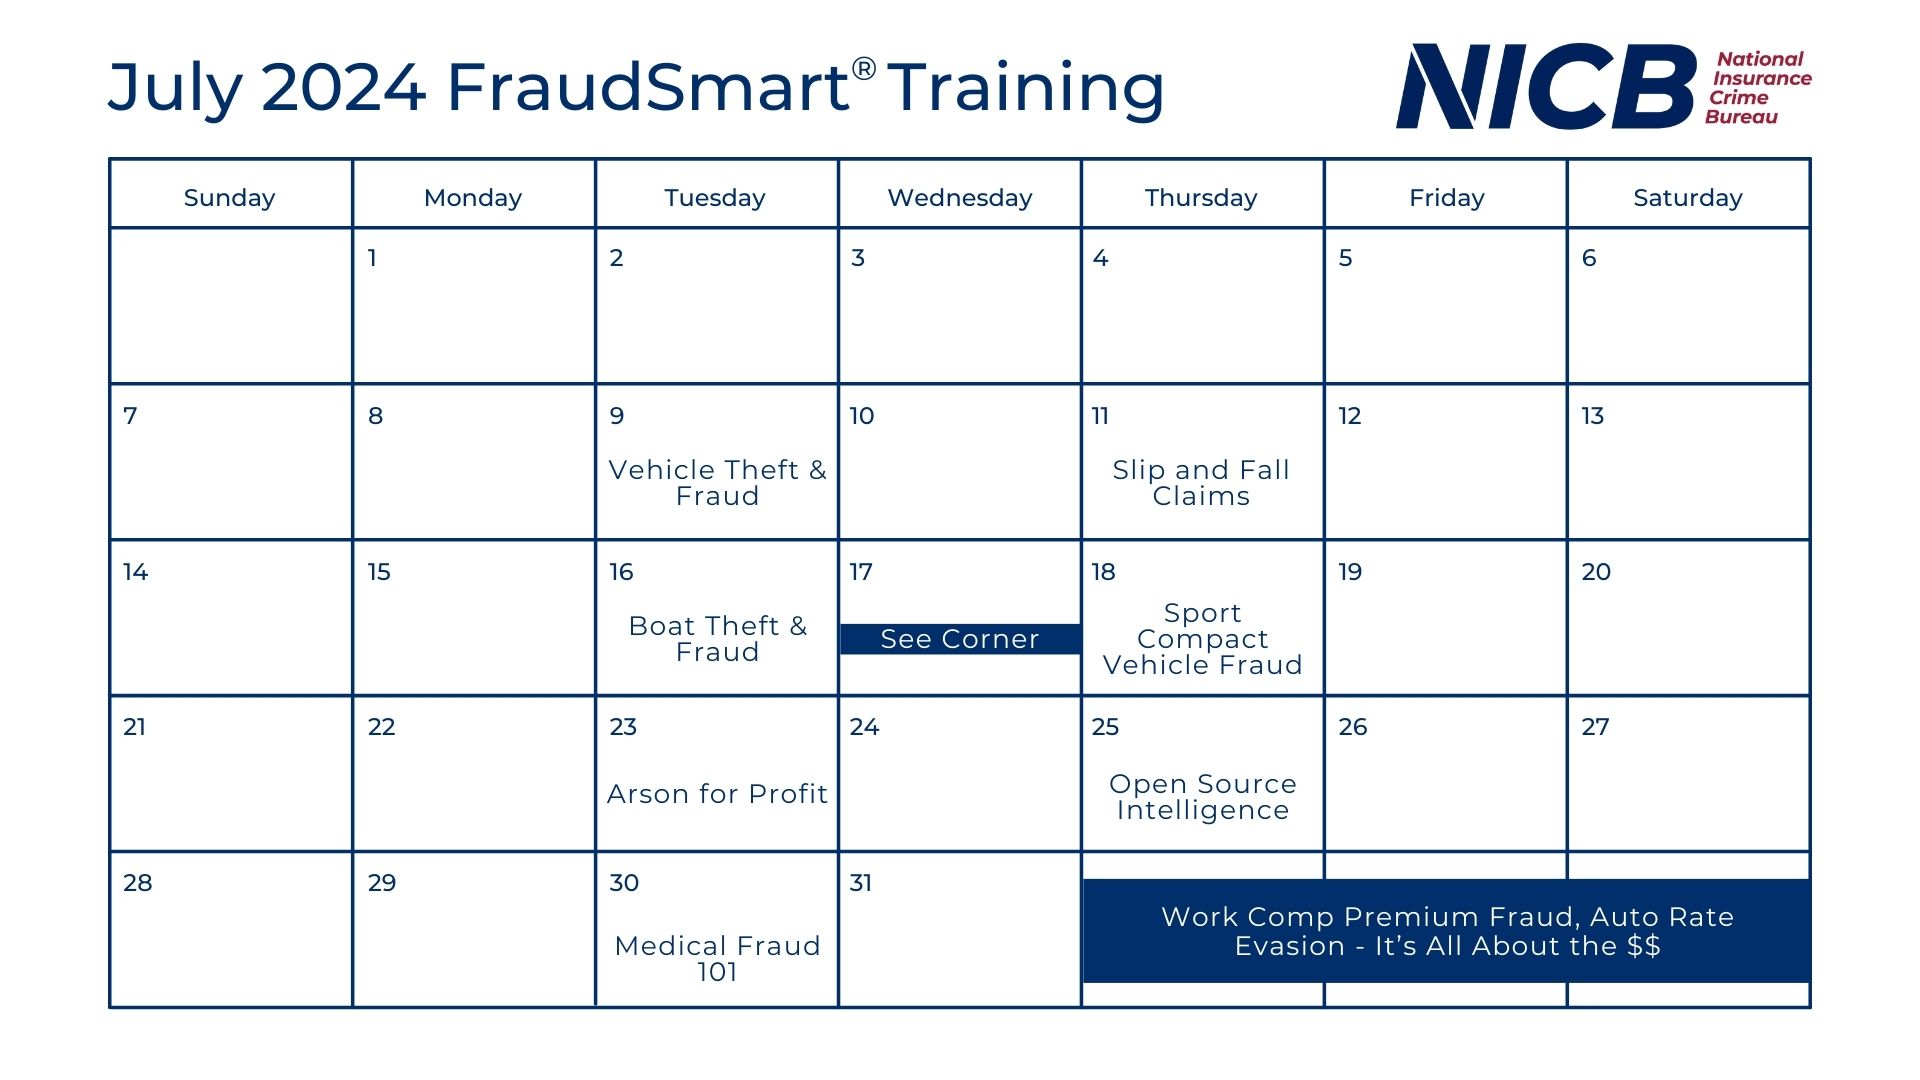 July 2024 FraudSmart Calendar